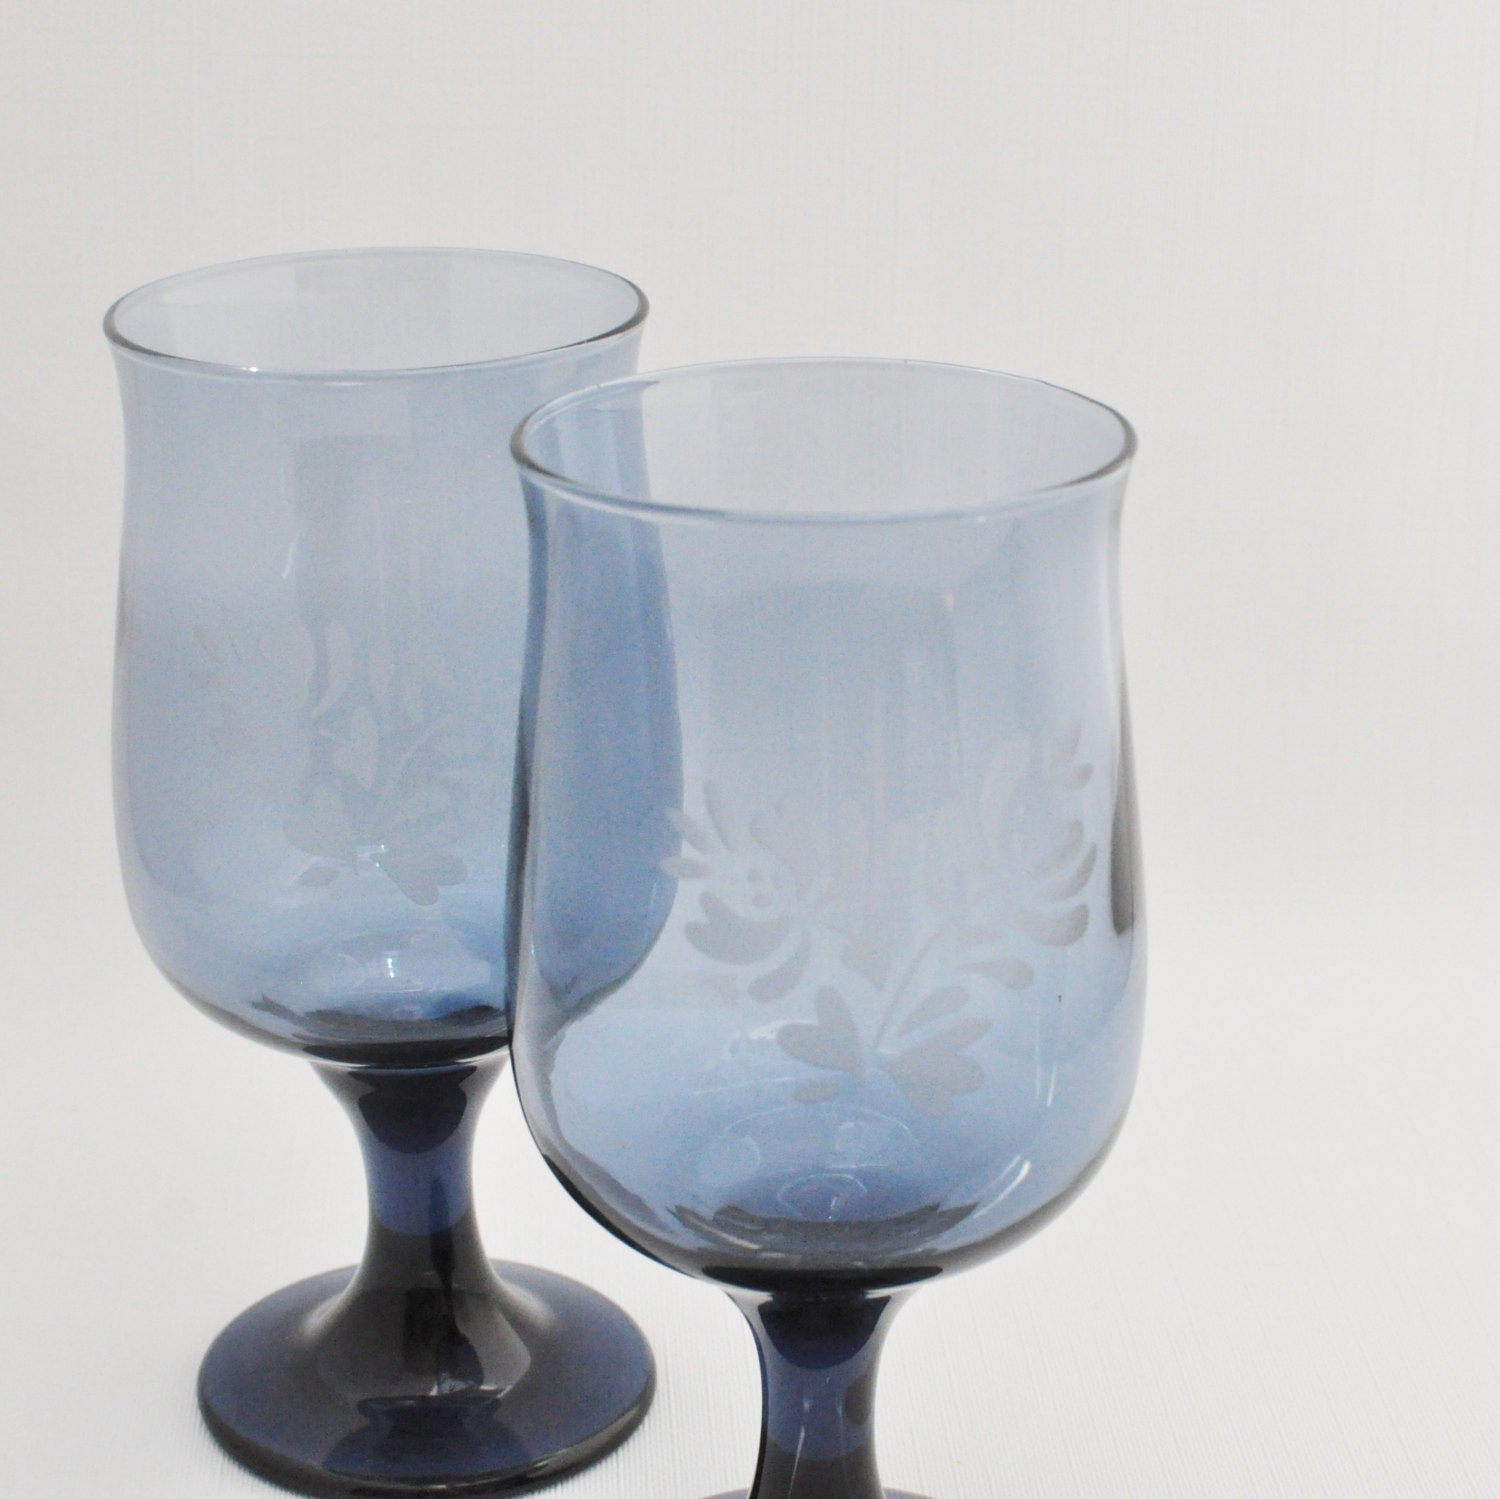 Pfaltzgraff Glass Etched Glasses Wine Glasses Blue Goblet Yorktowne Stem Glassware